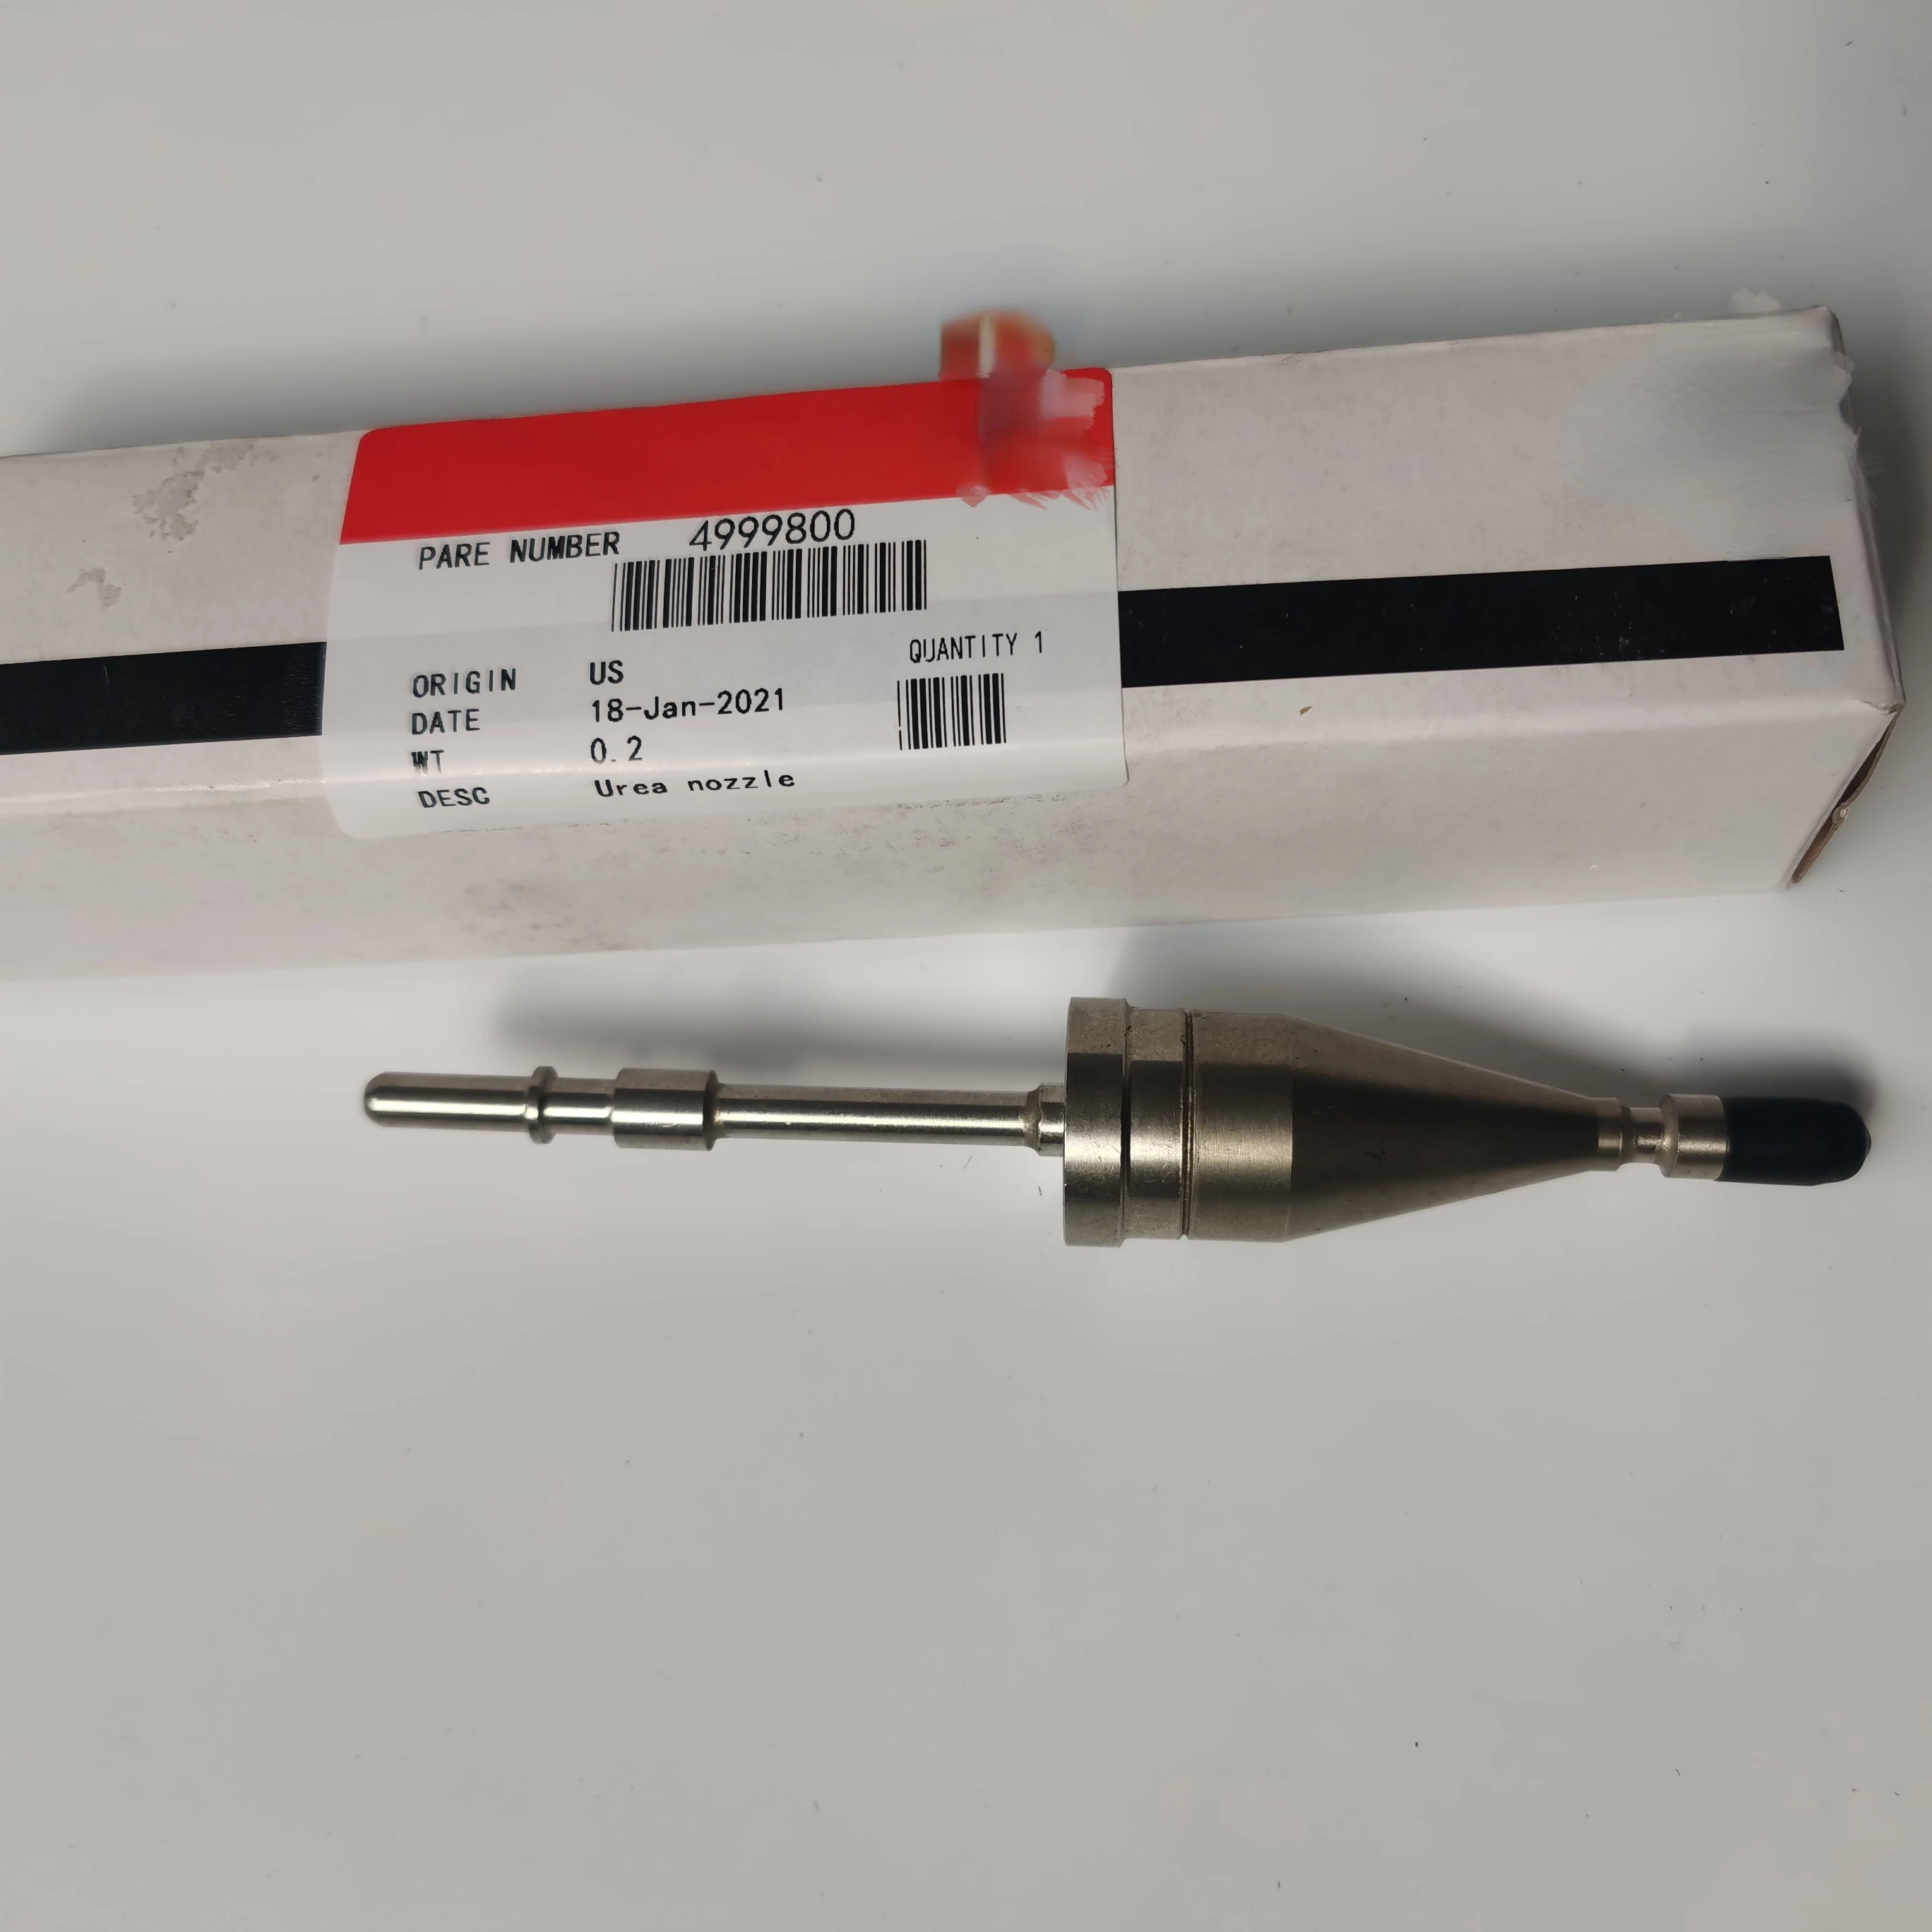 Universal 4936201 Urea injector Q-67693/4999800 Urea Pump Nozzle for Cummins ISDE Engine Emitek